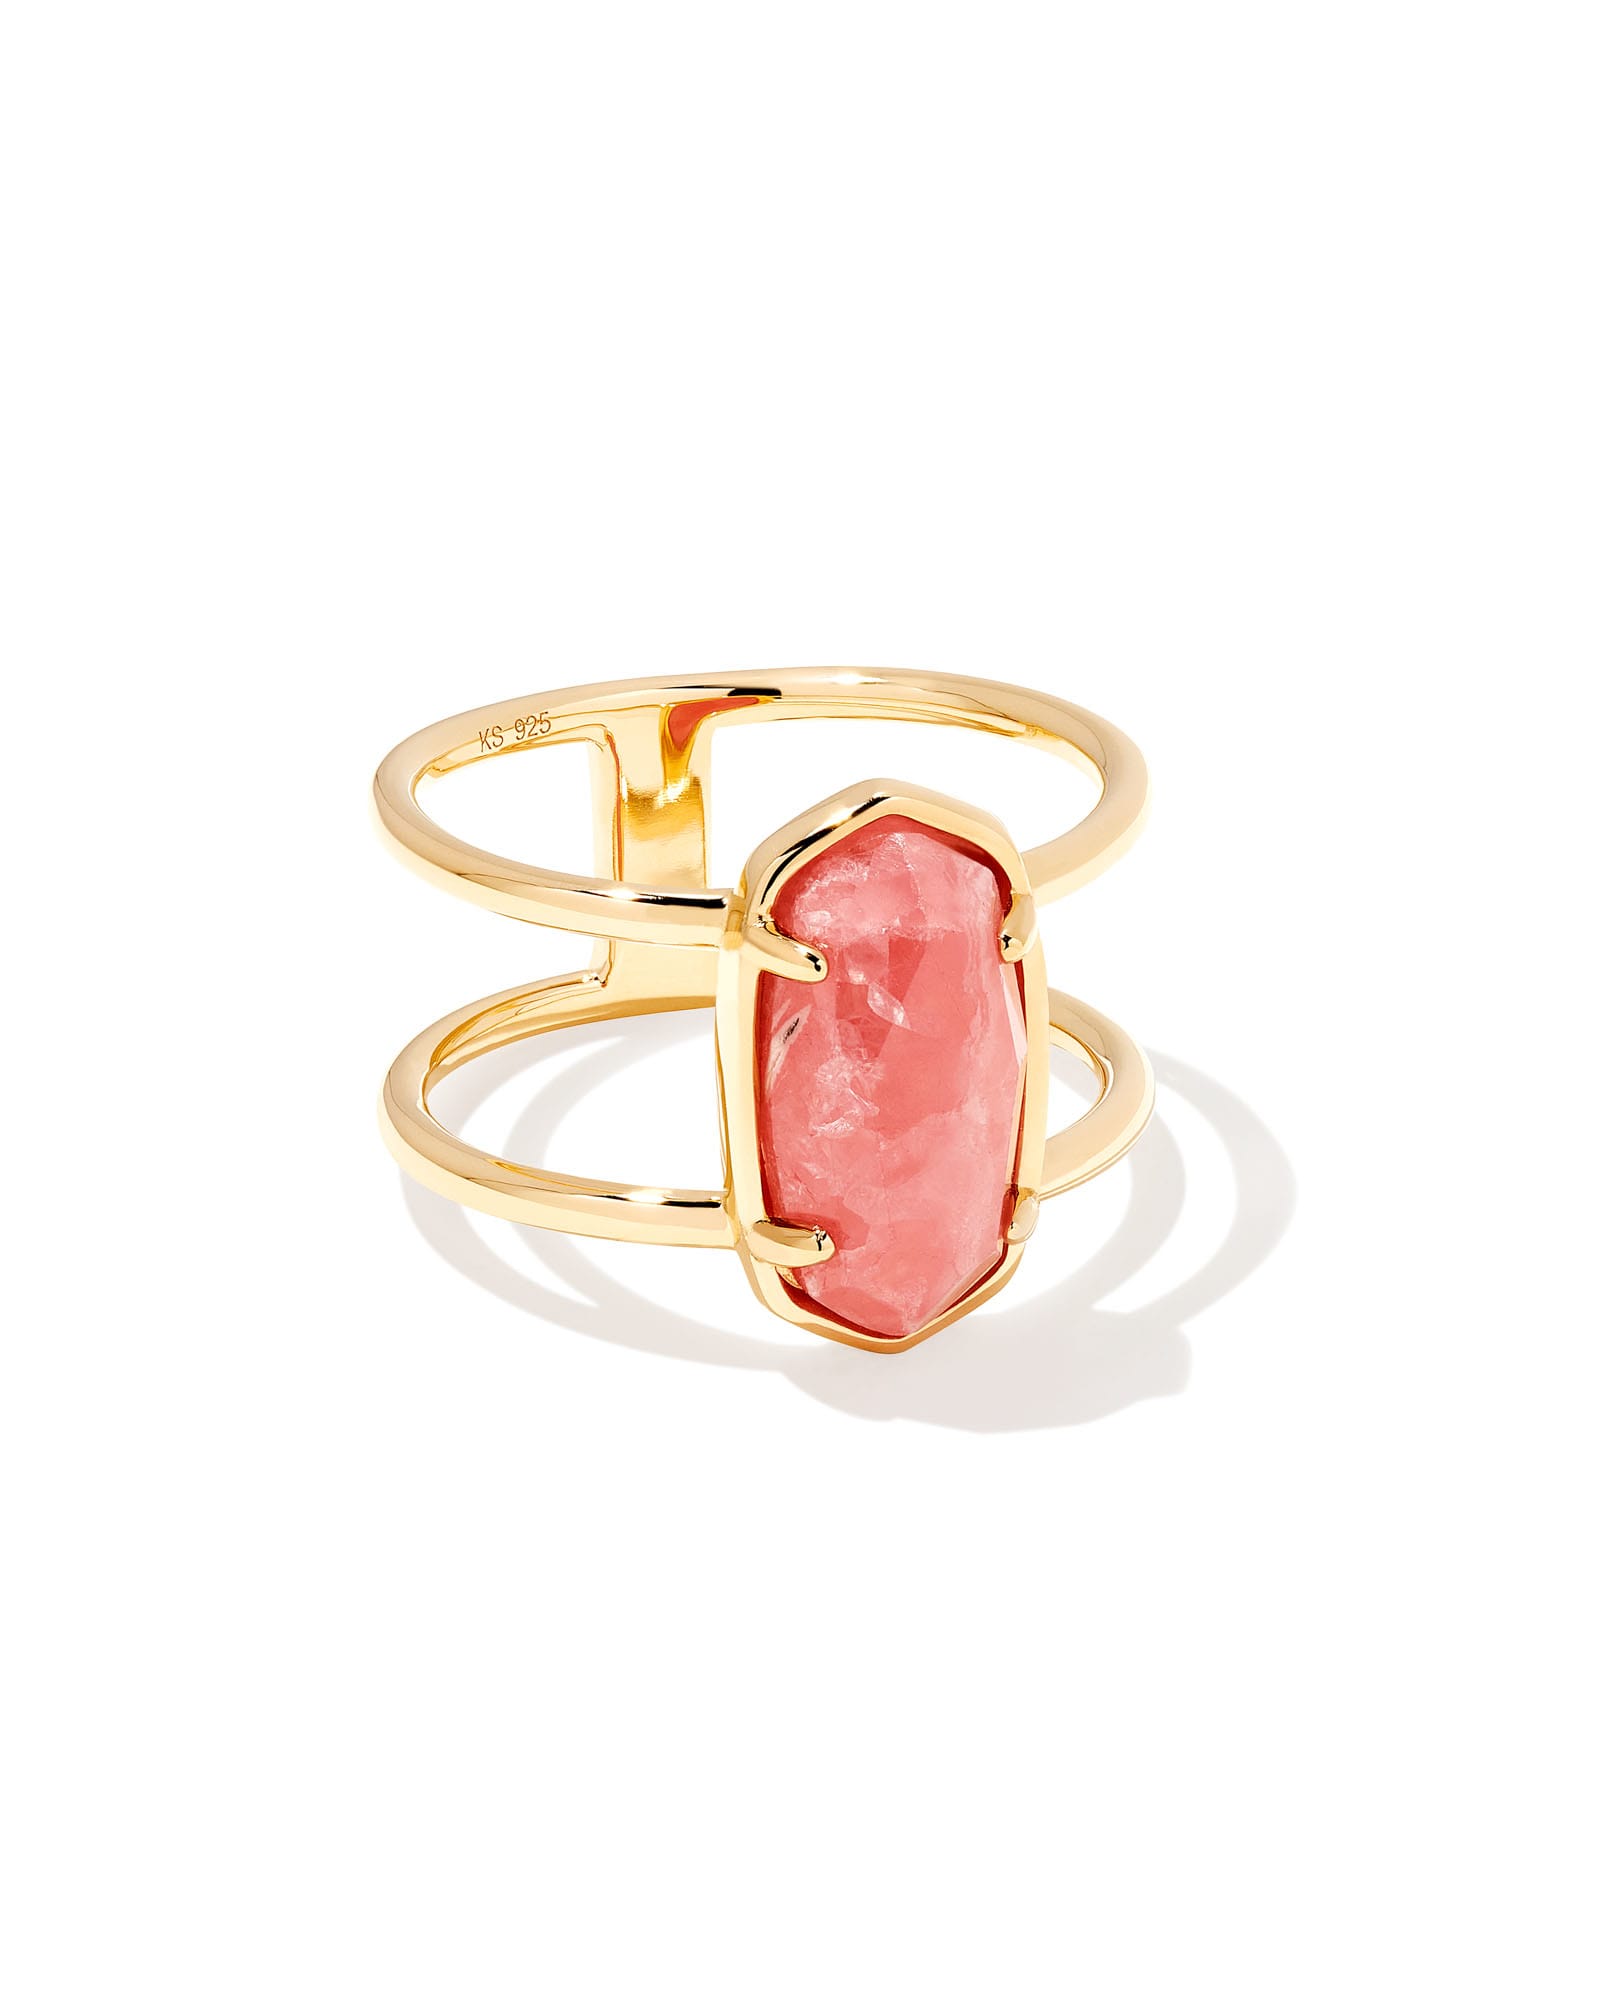 Kendra Scott Elyse 18k Gold Vermeil Double Band Ring in Pink | Rhodochrosite